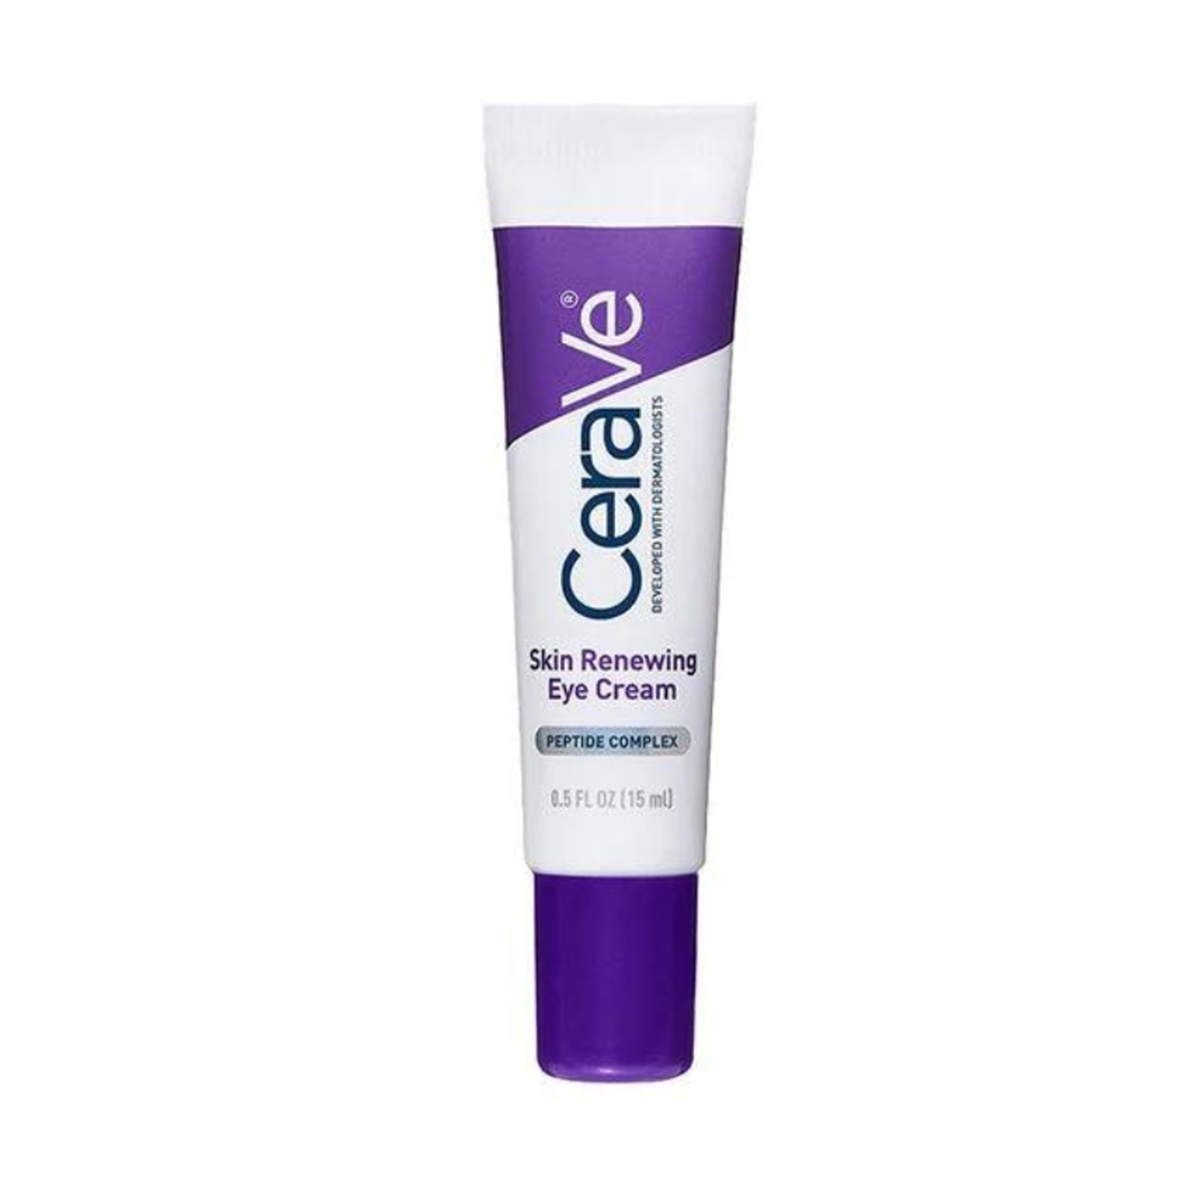 CeraVe Skin Renewing Eye Cream 15g